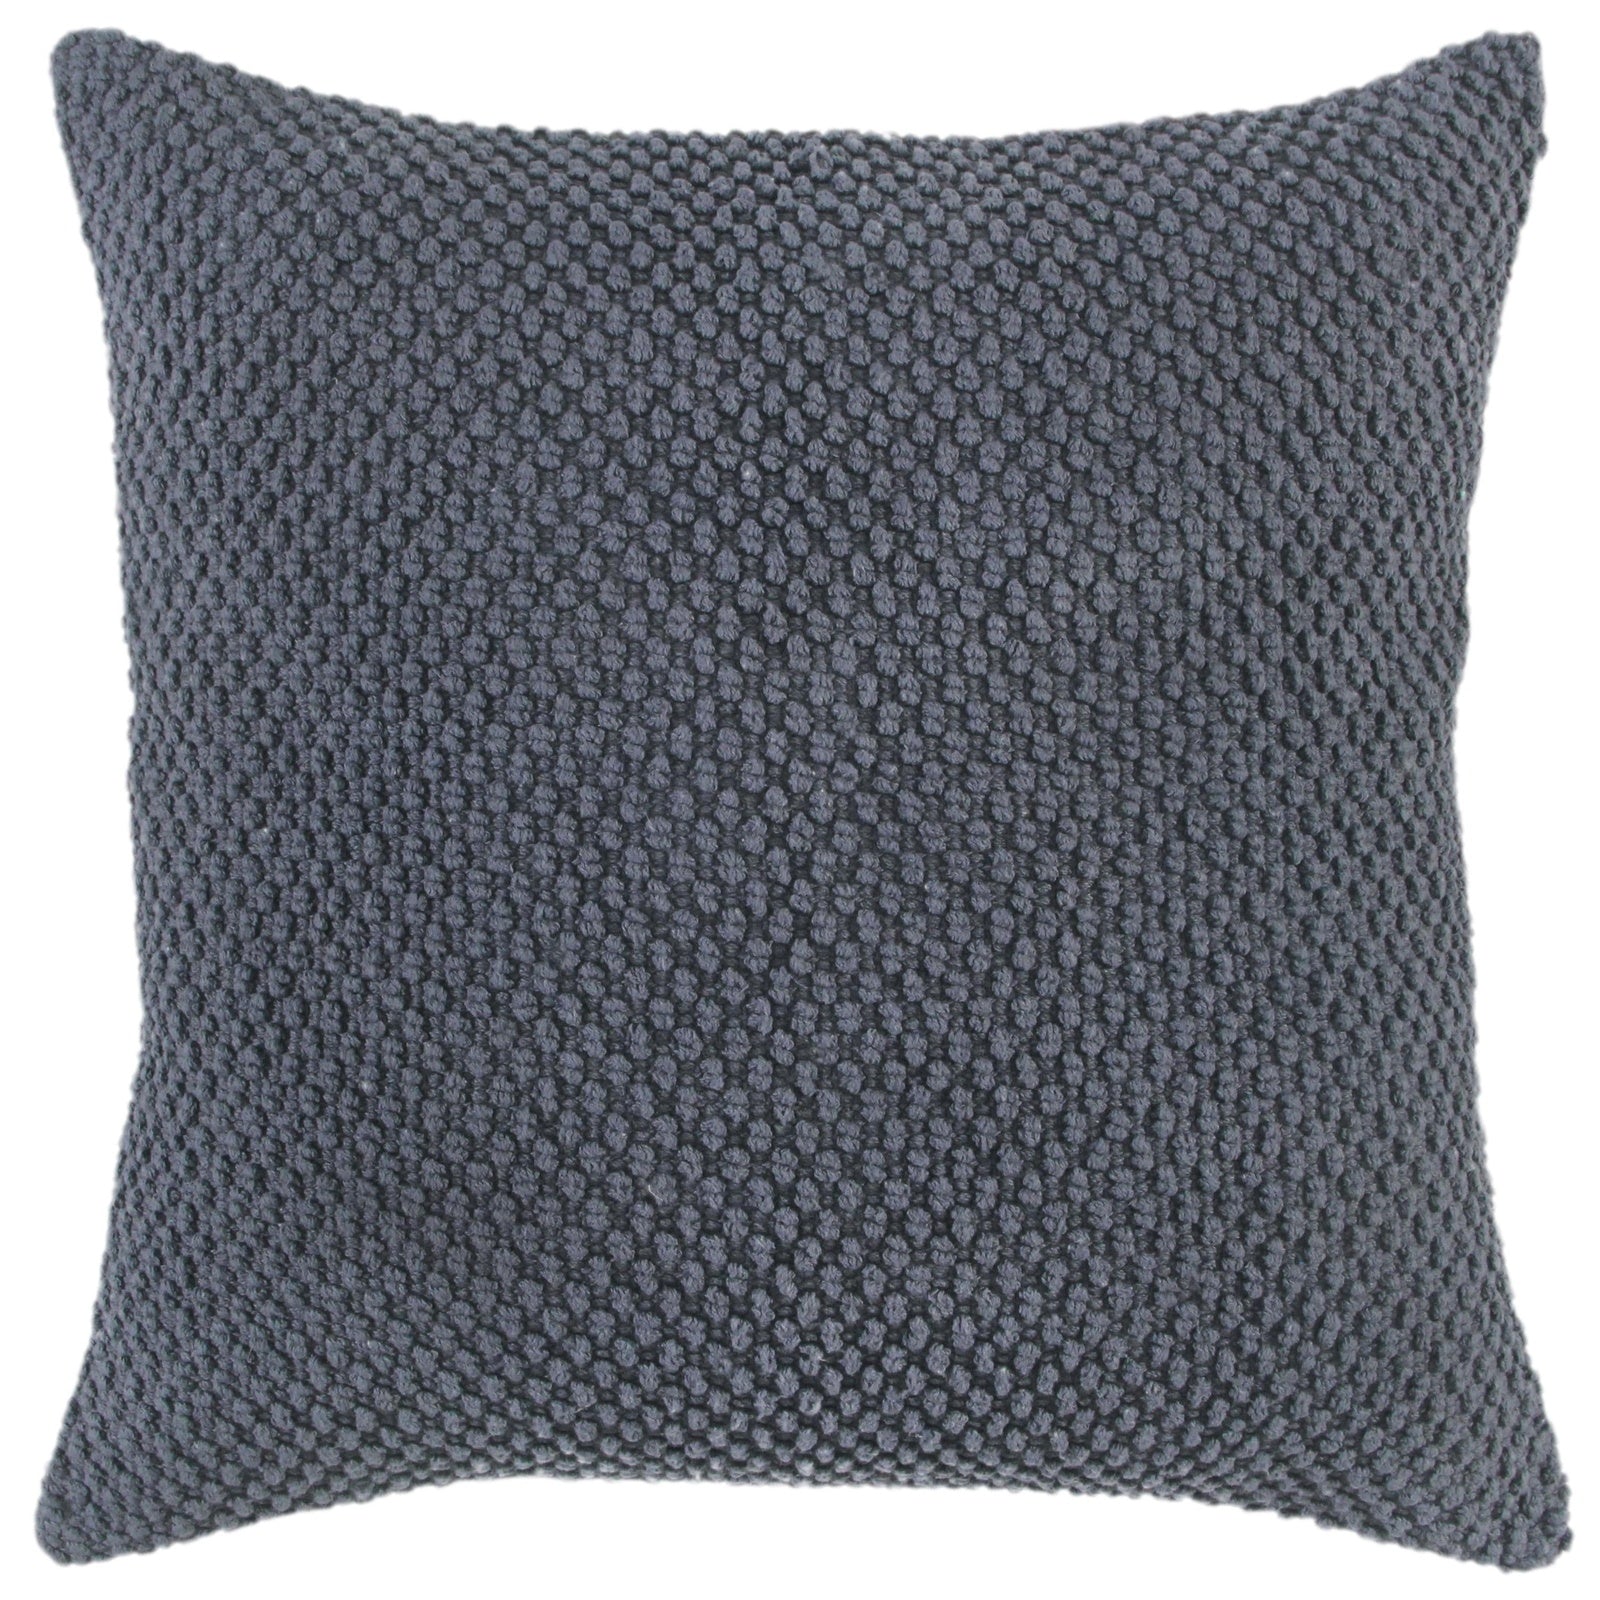 Woven Cotton Solid Pillow Cover - Decorative Pillows